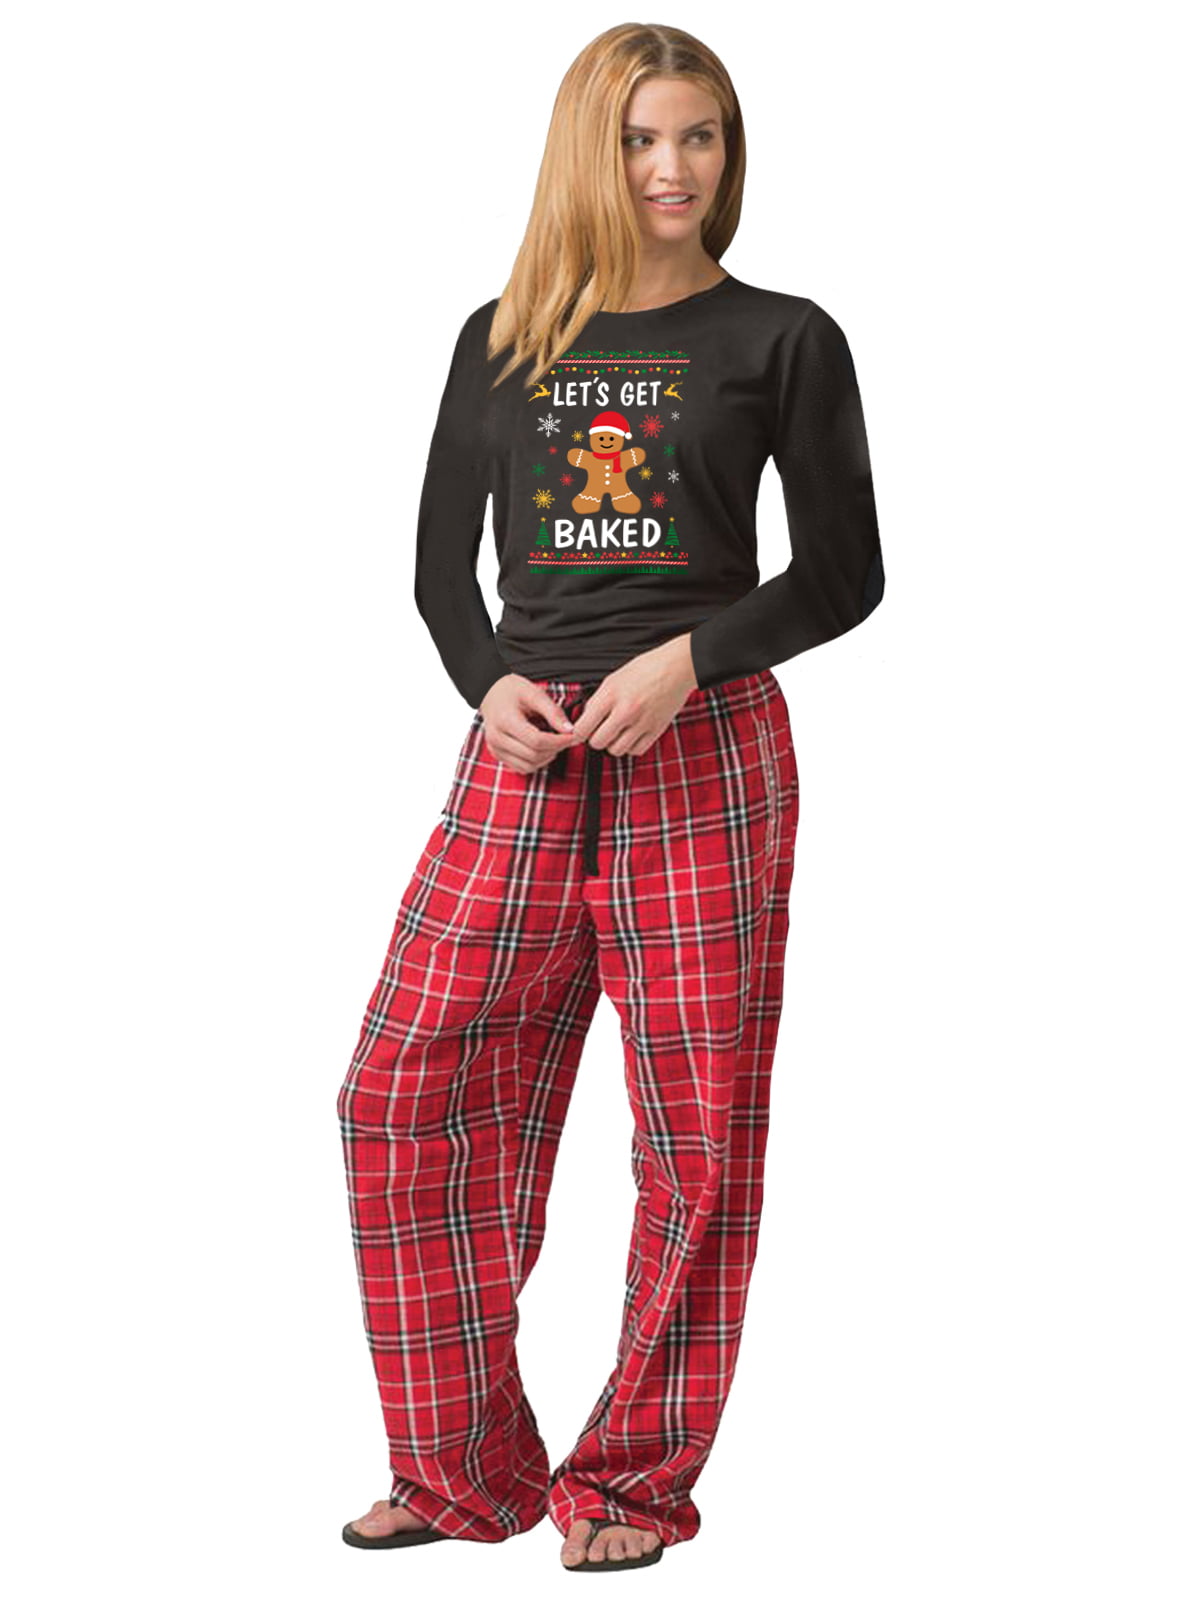 Tacos.Jpg CafePress Funny Adult One-Piece PJ Sleepwear Creme Novelty Footed Pajamas 